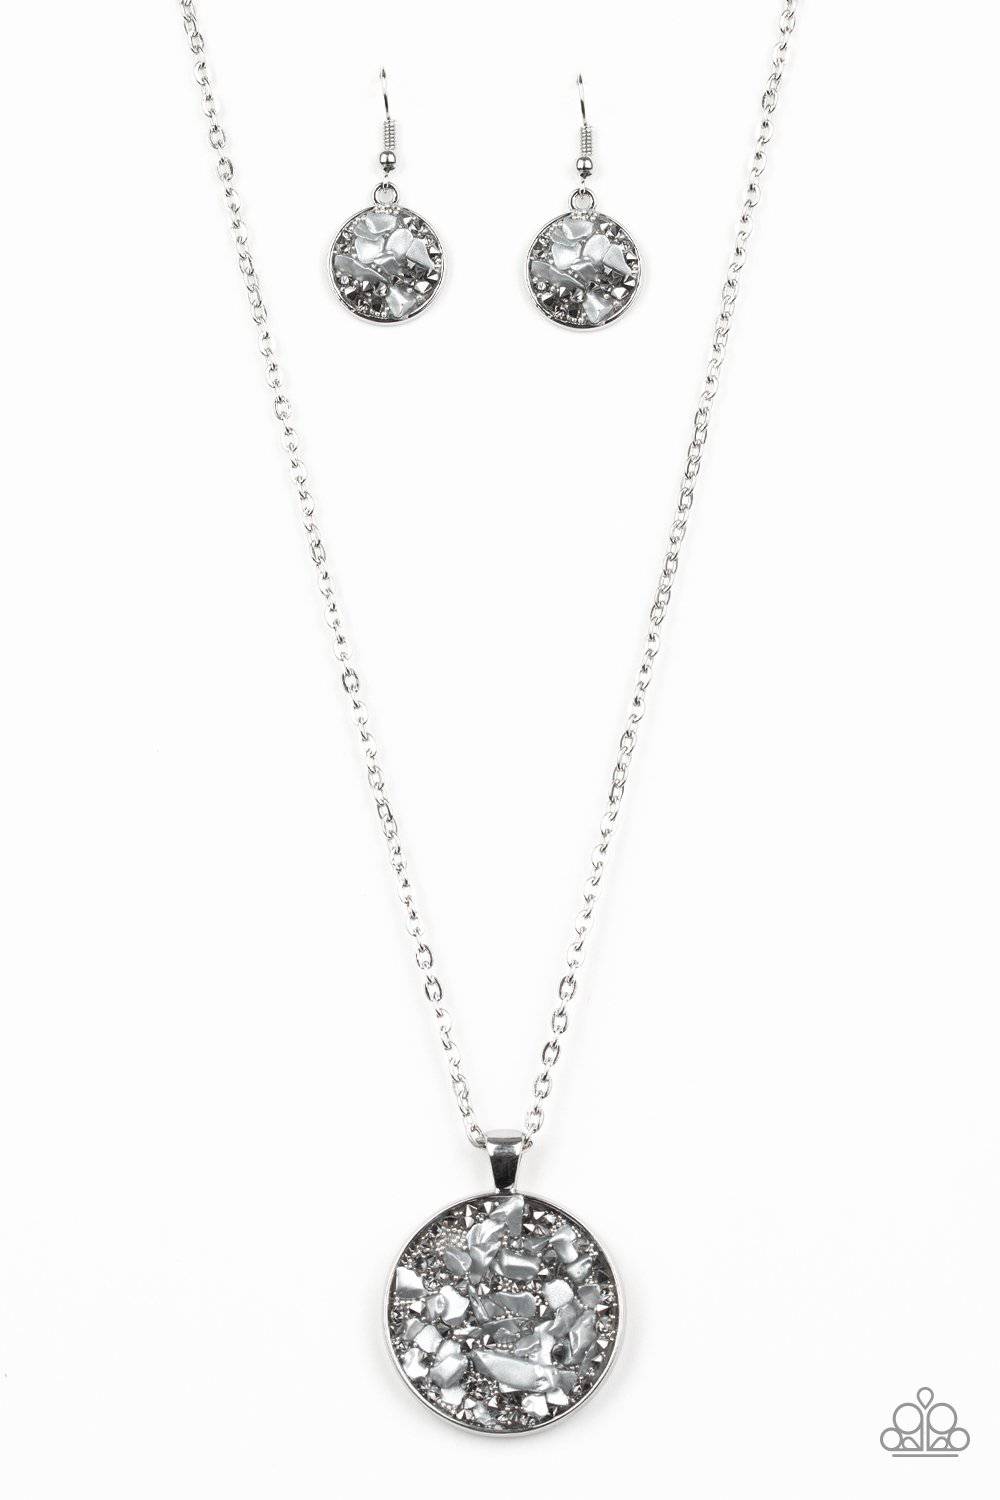 GLAM Crush Monday - Silver Metallic Rhinestone Necklace - Paparazzi Accessories - GlaMarous Titi Jewels